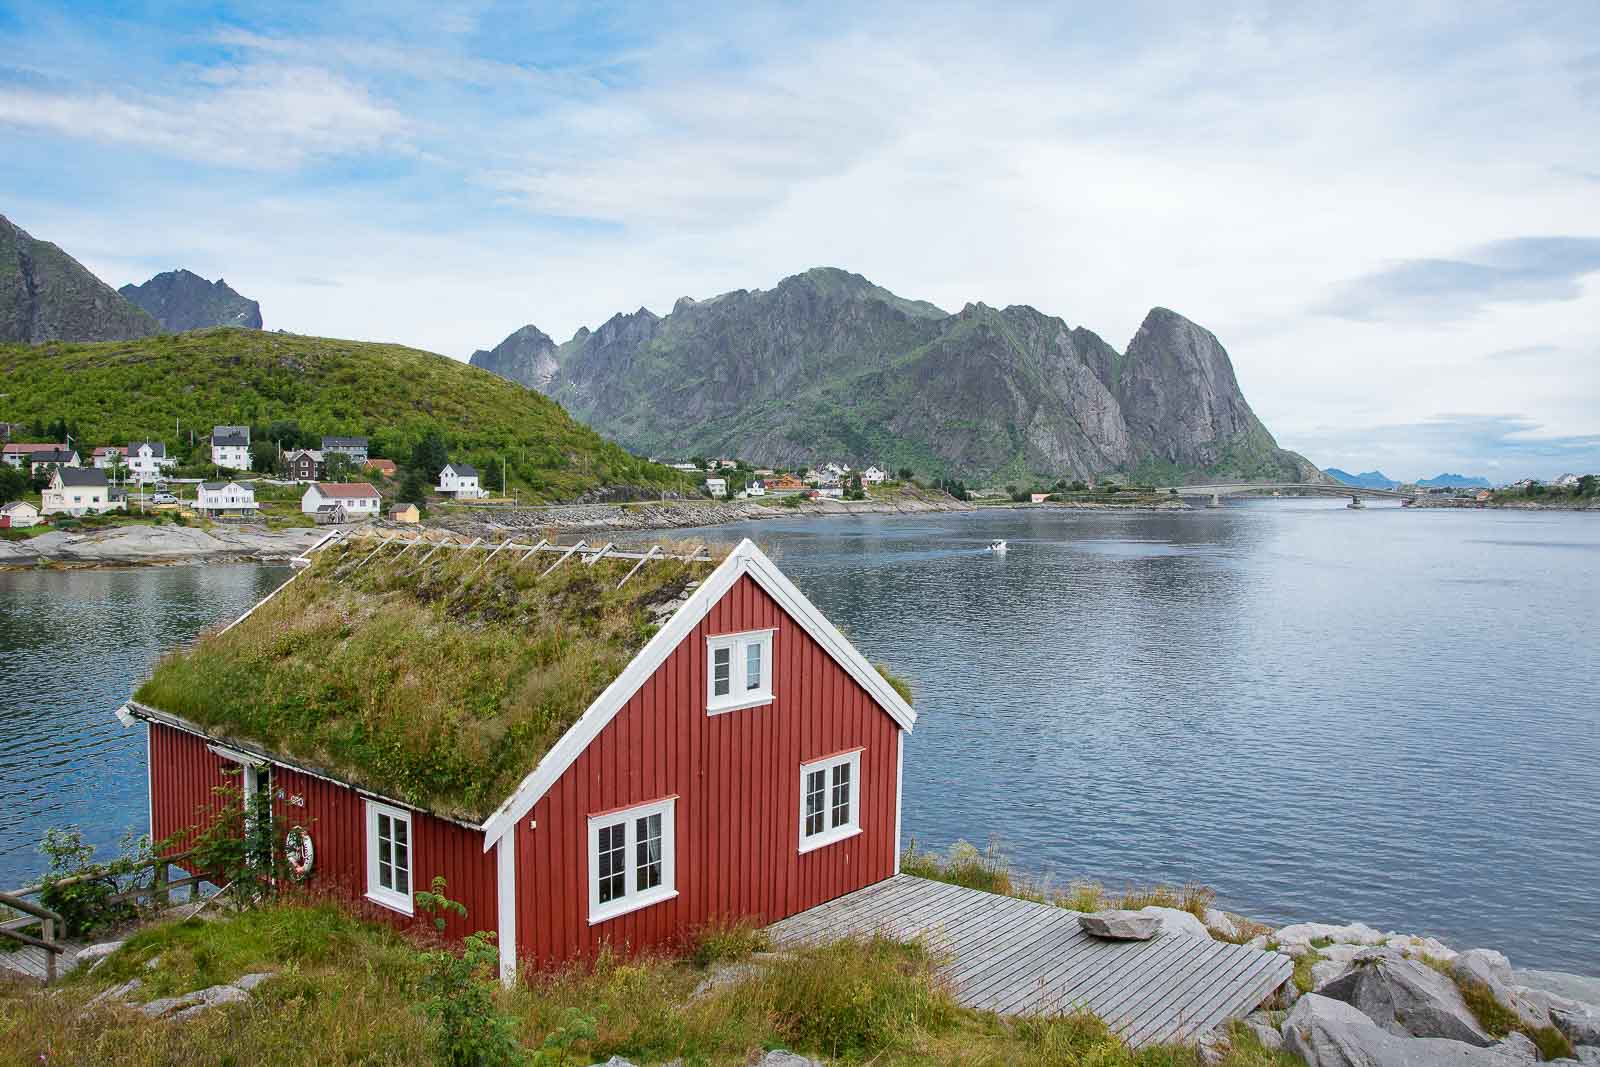 Fjord de Geiranger, Norvège